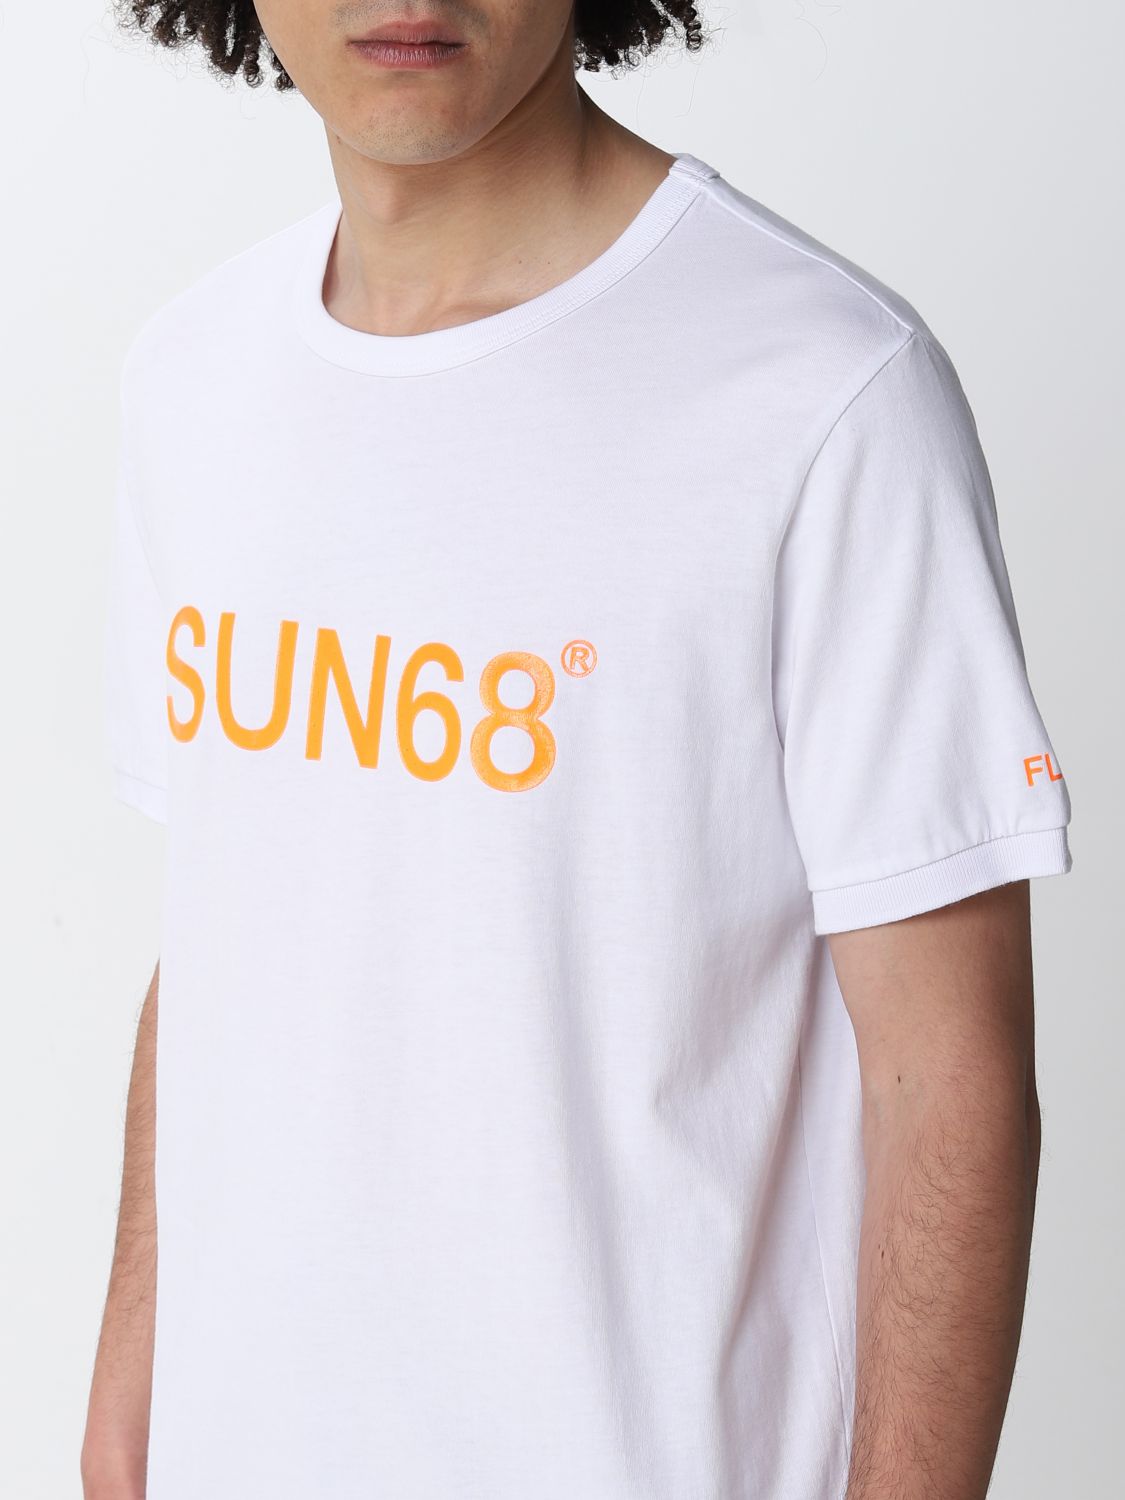 Camiseta Sun 68: Camiseta Sun 68 para hombre blanco 3